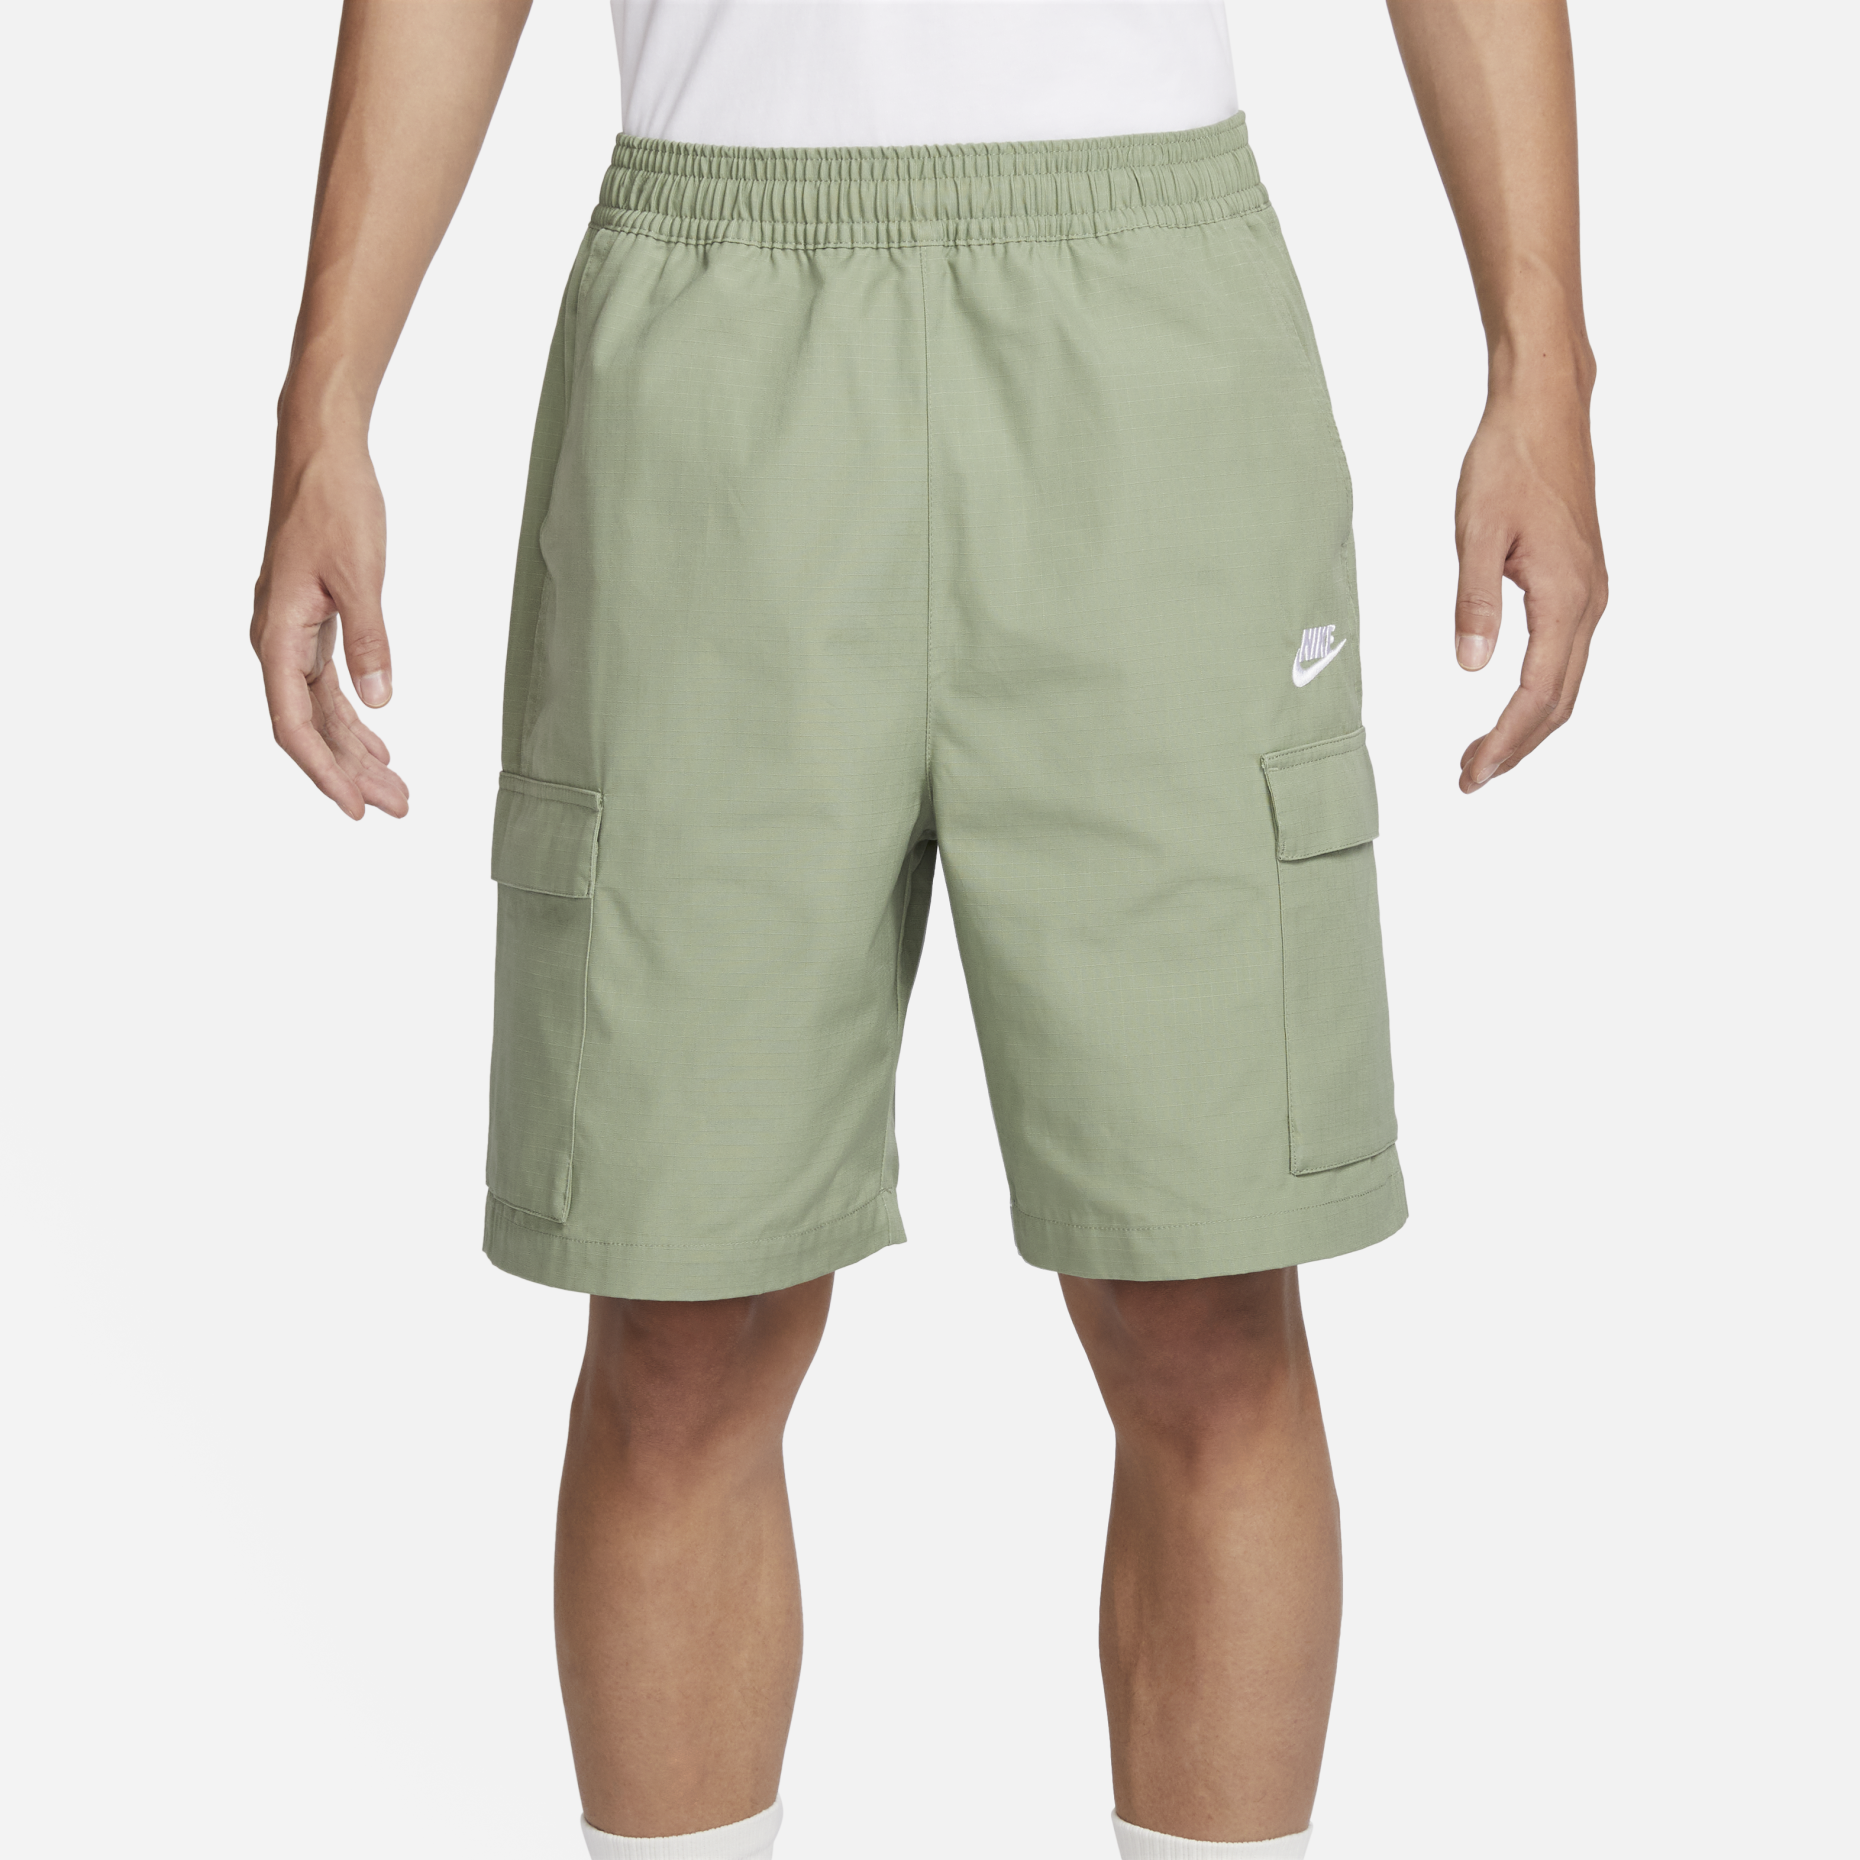 Шорты Nike Men's Woven Cargo, светло-зеленый